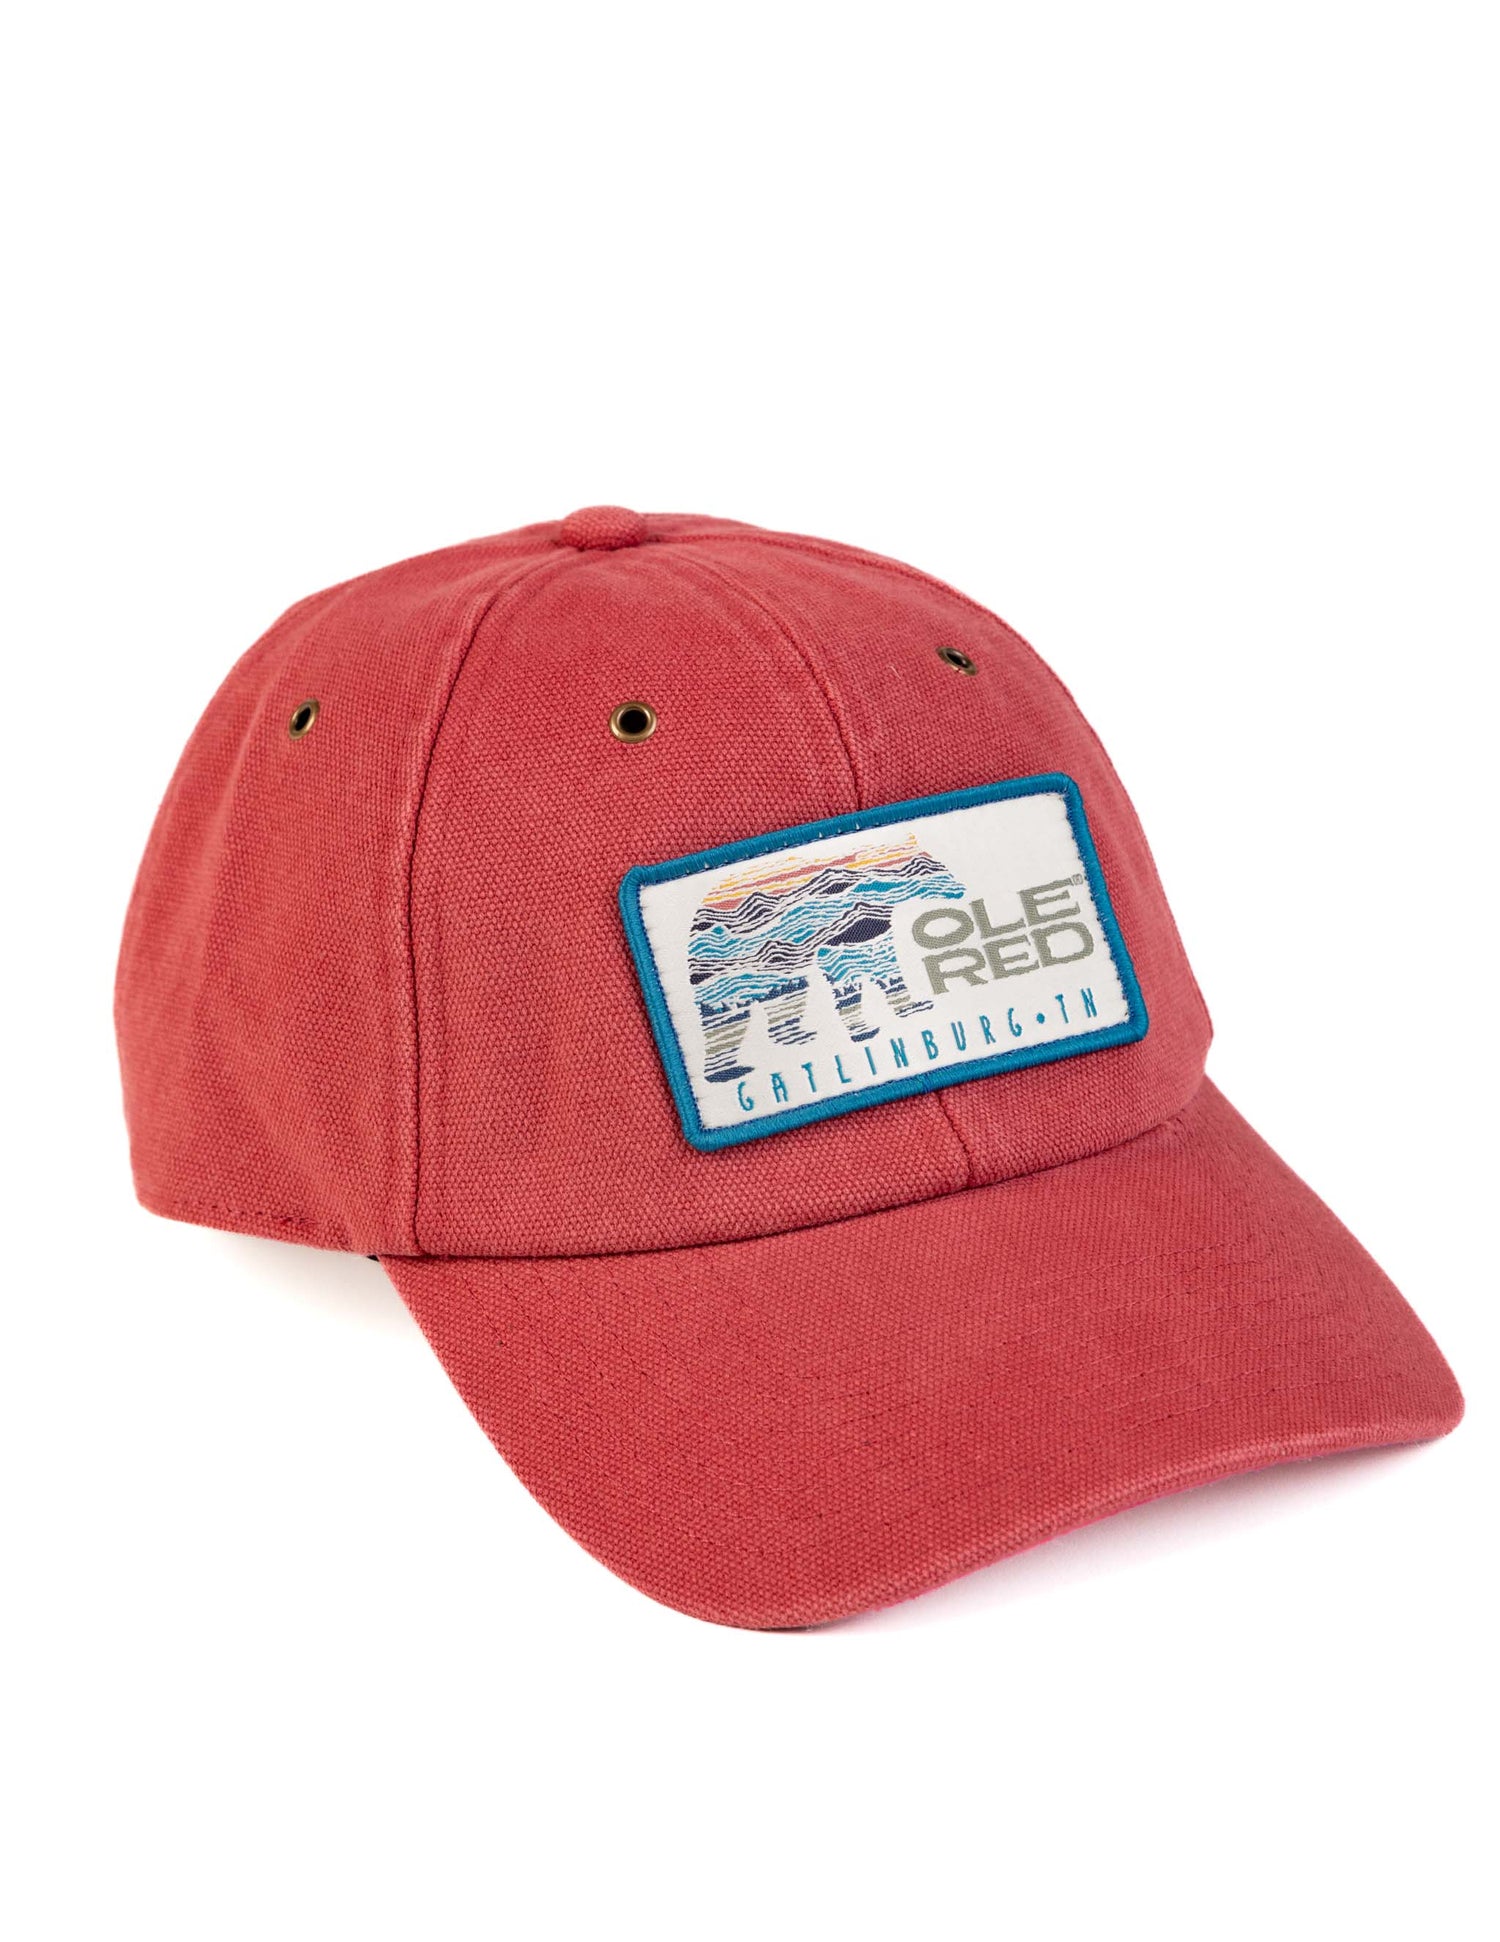 Ole Red Gatlinburg Scenic Bear Patch Hat